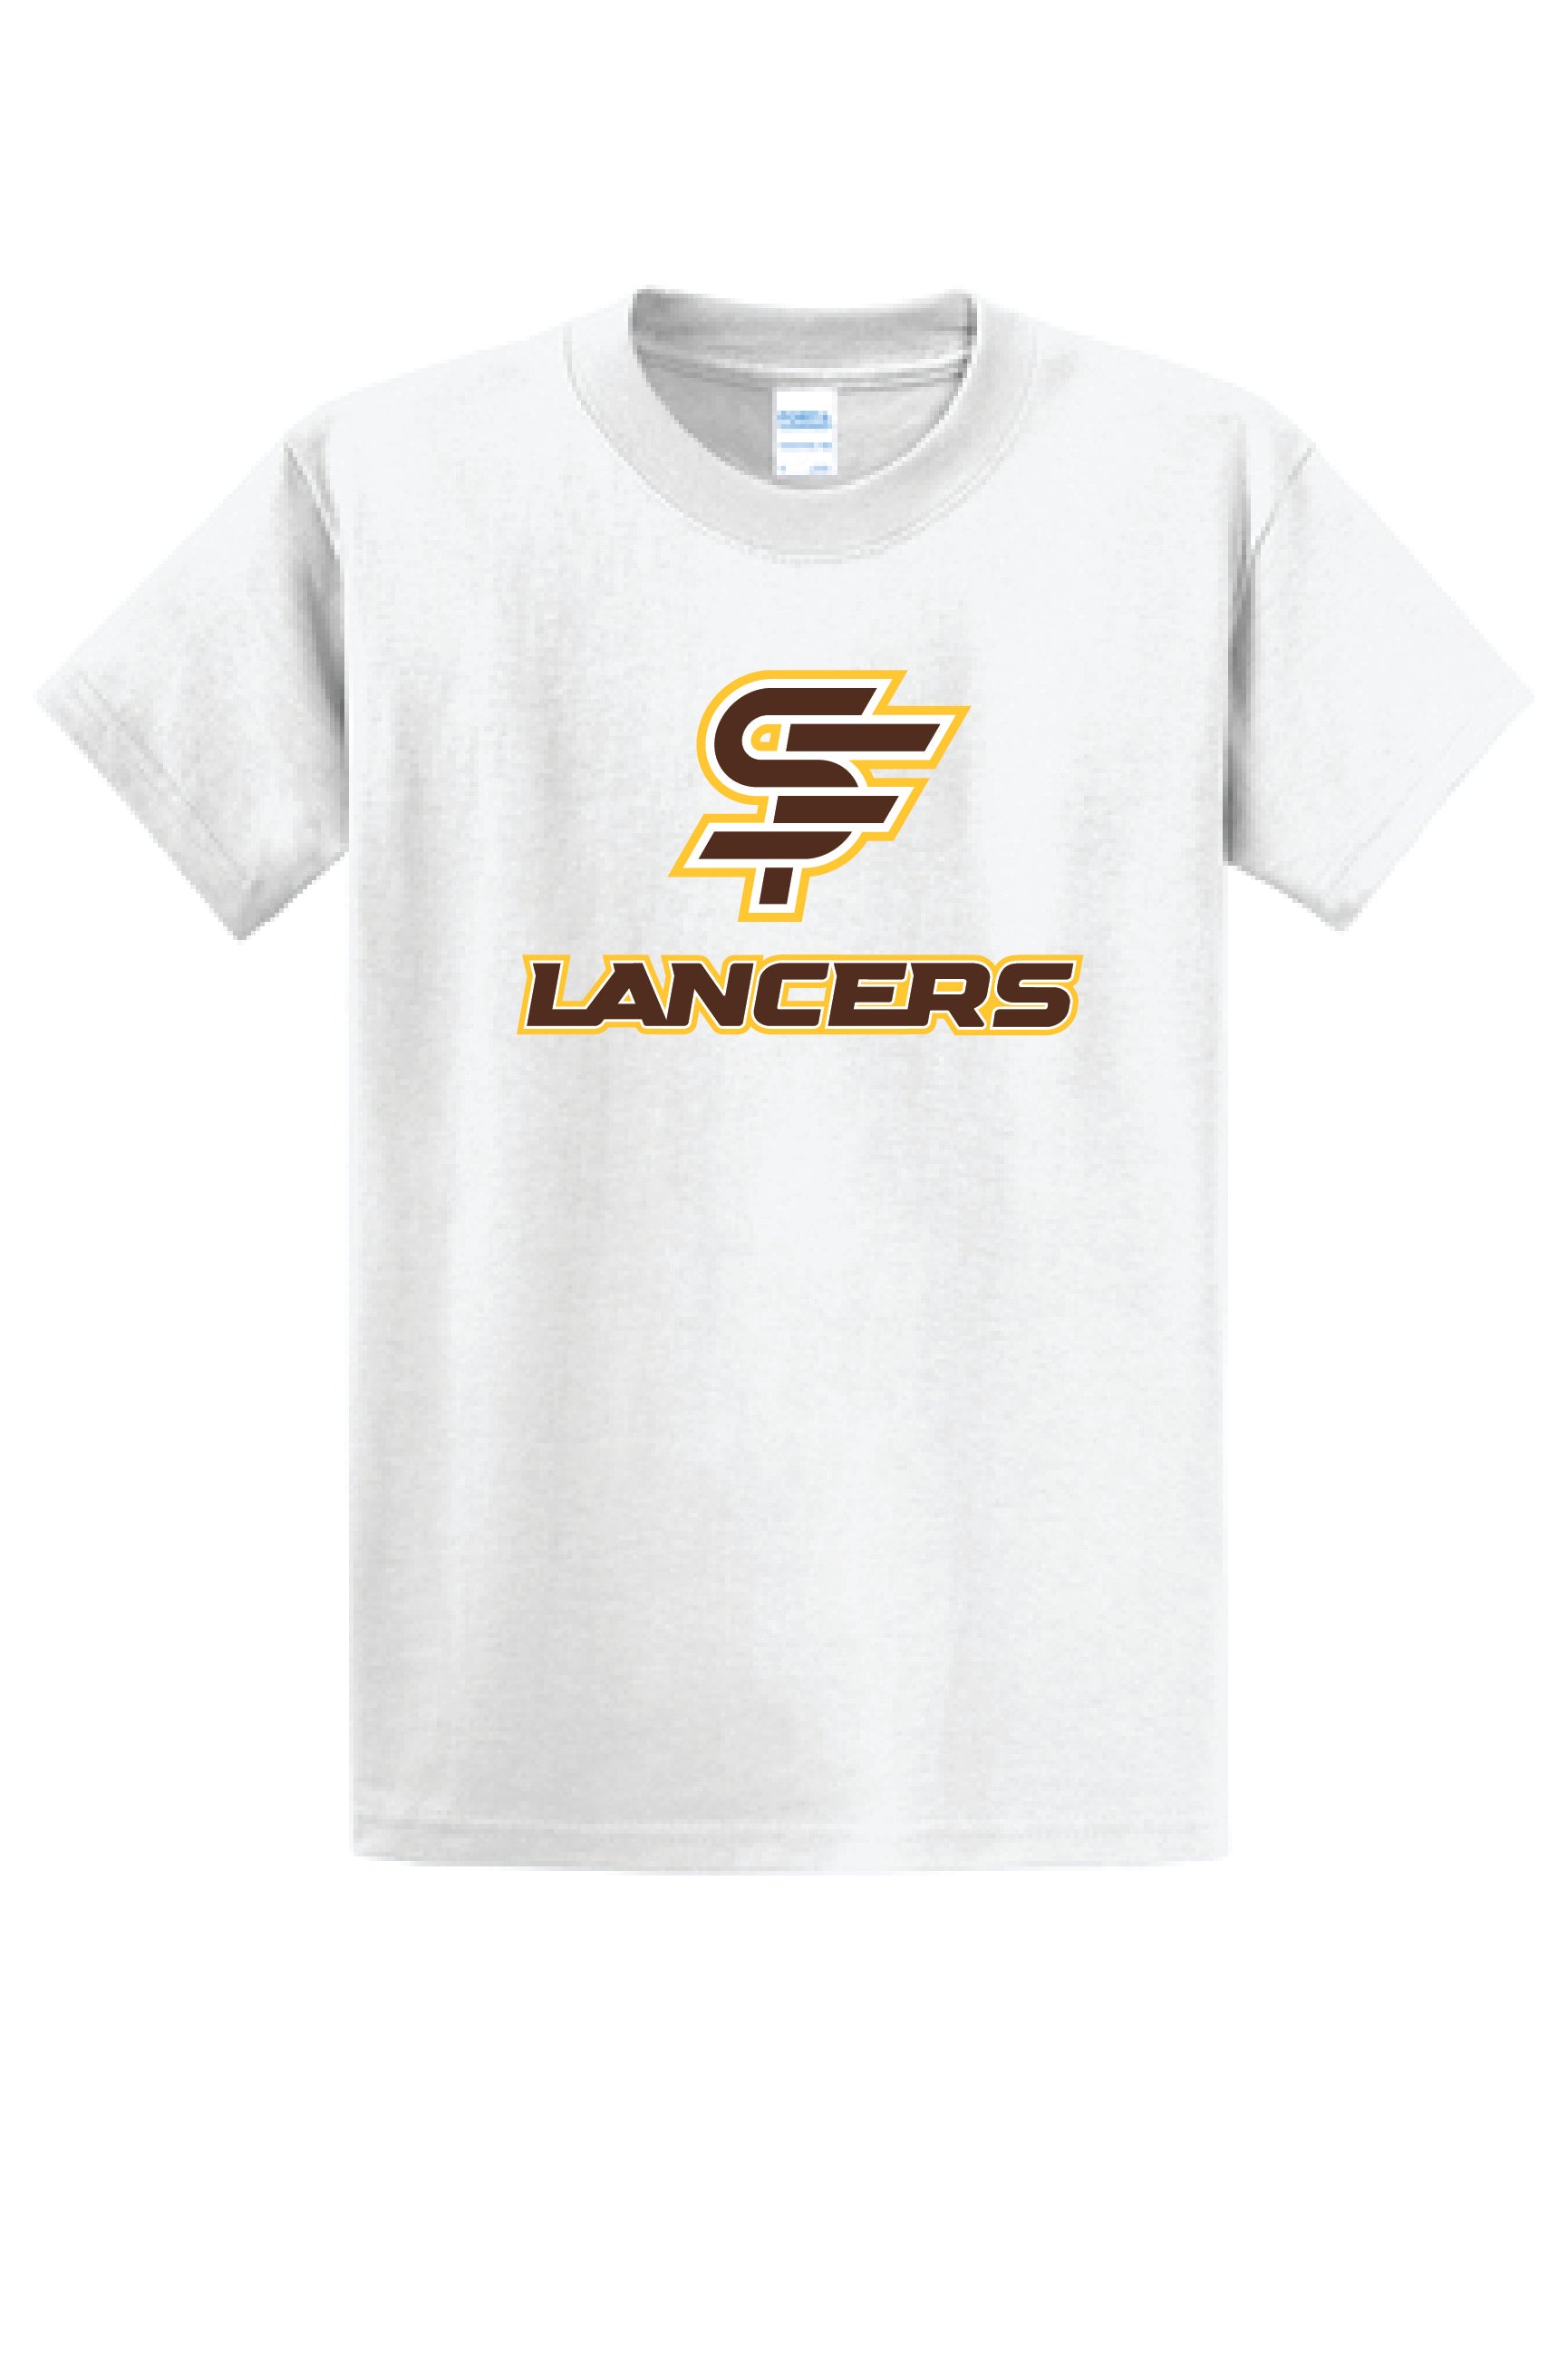 T-Shirt/ SHORT Sleeve, Gold/Brown/White Logo, New Saint Francis Design